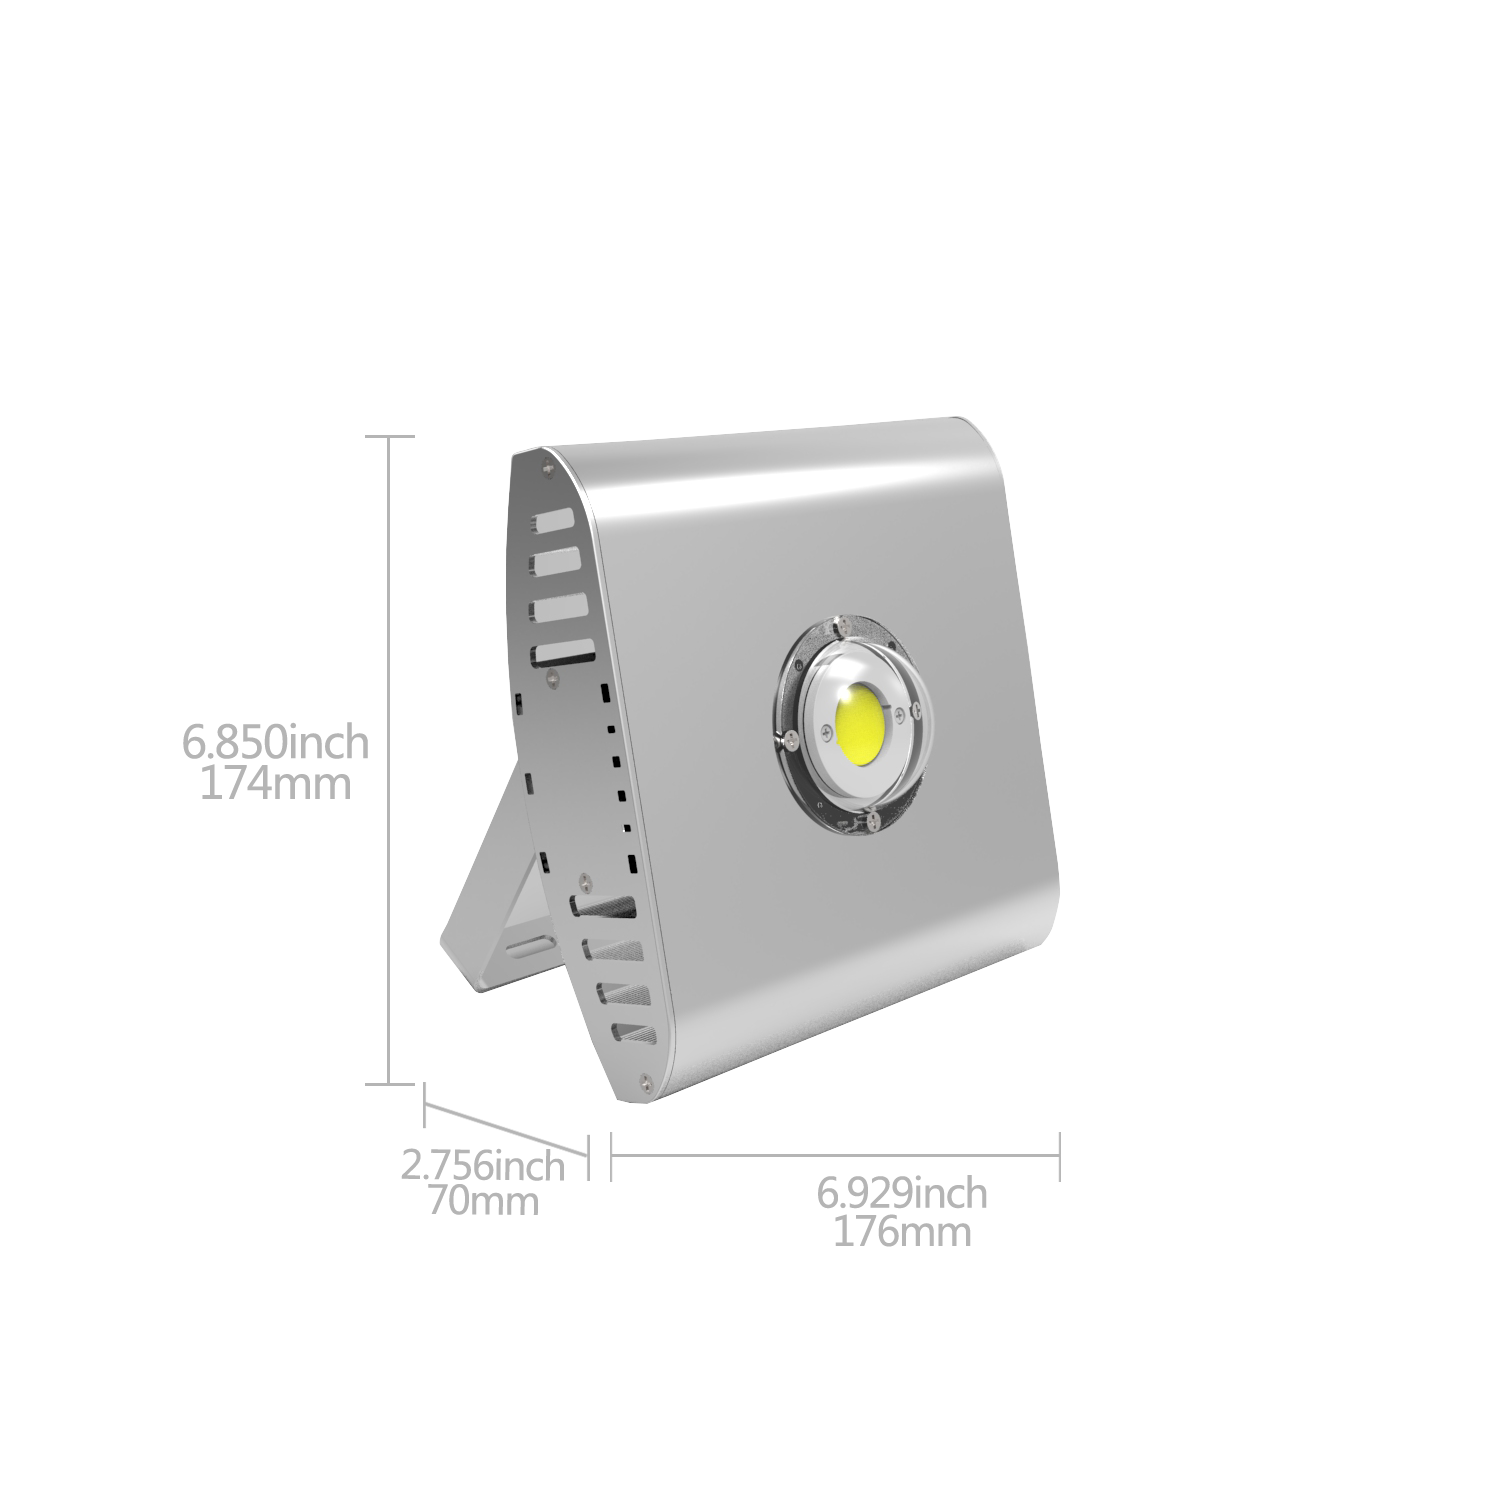 Aigostar - Confezione da 5 Faretto a LED COB, 50W, 4500LM, Impermeabile IP65, Luce Naturale 4000K[Classe di efficienza energetica A+]